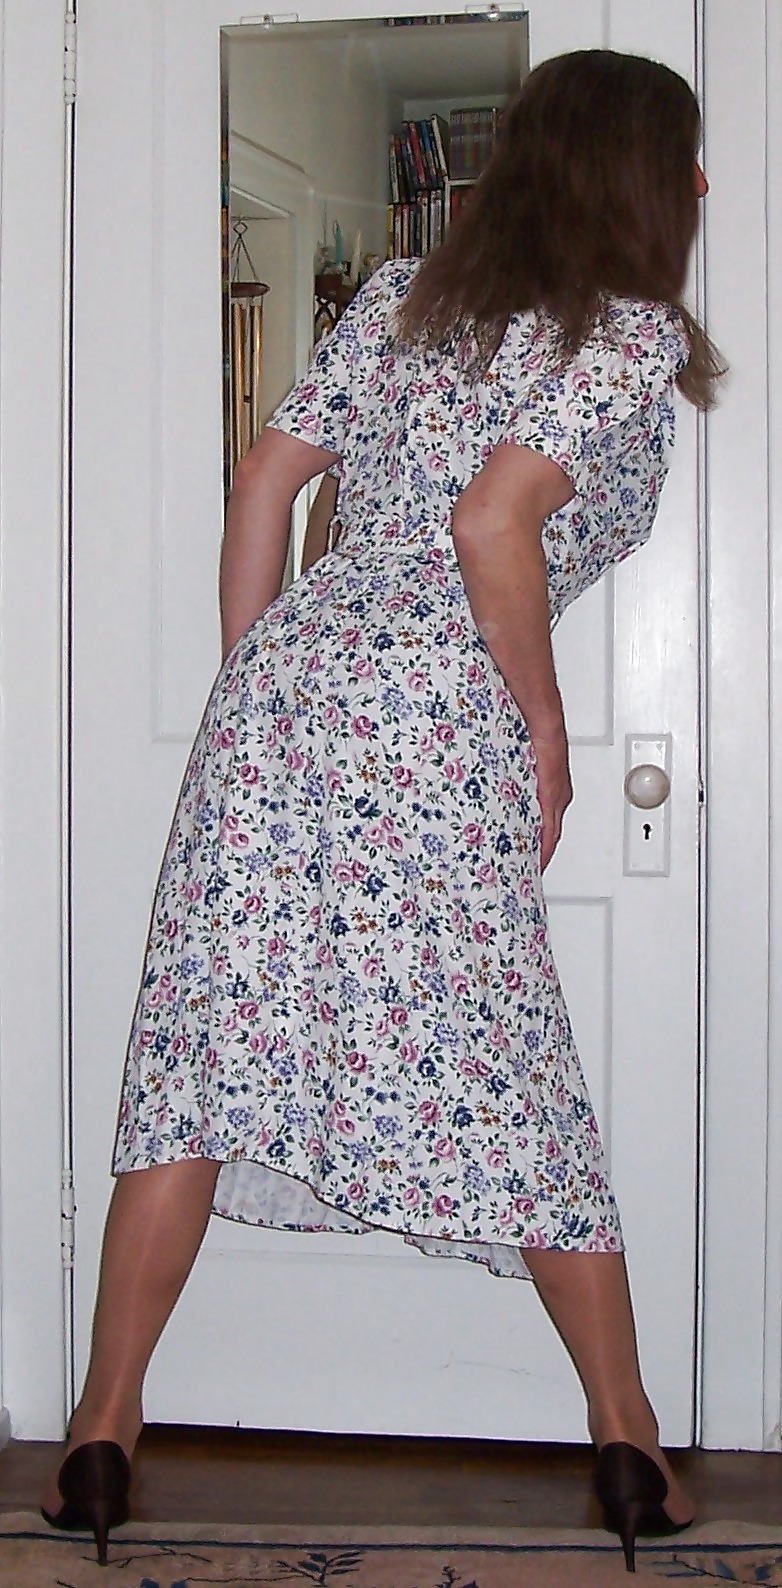 My Spring Dress #7838856